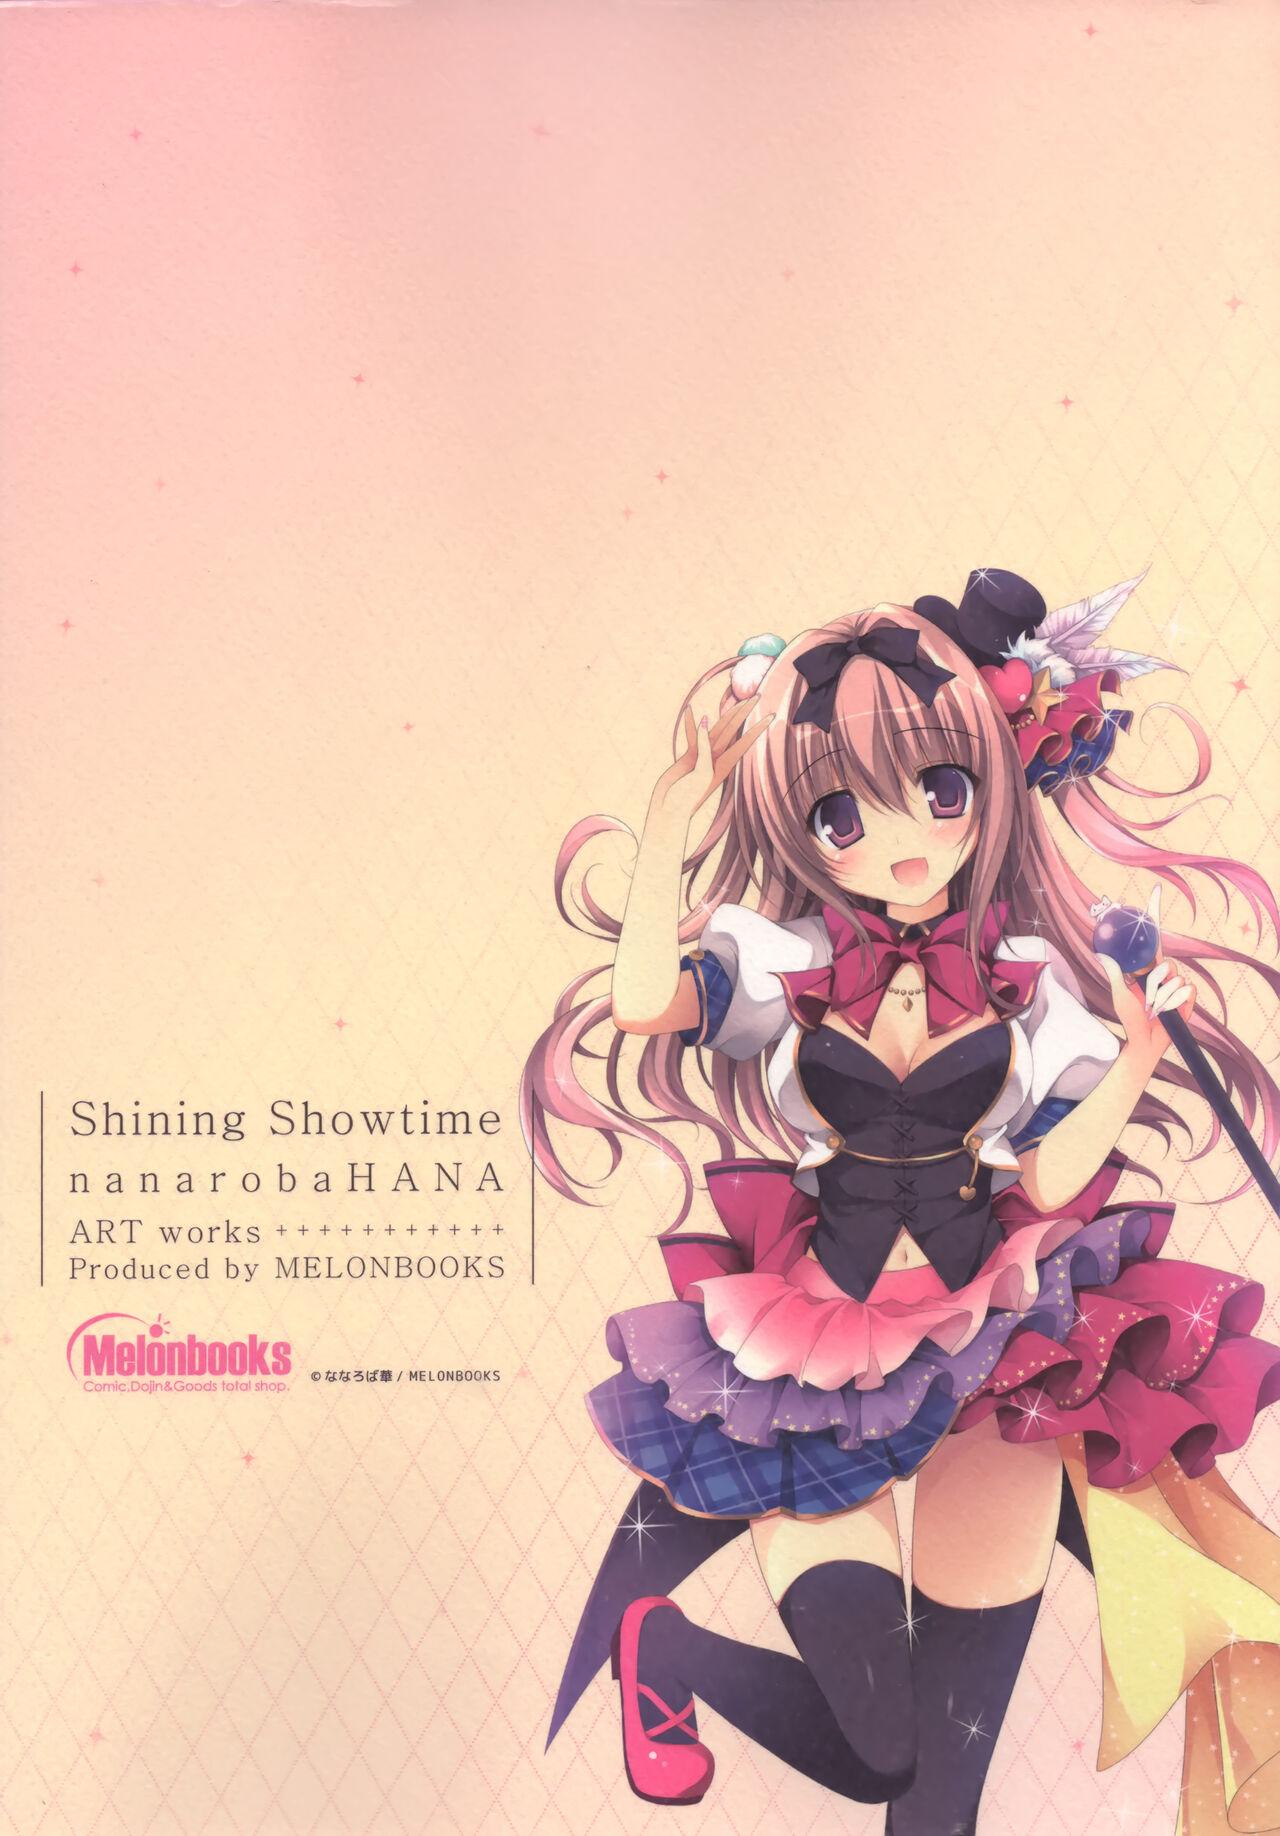 Shining Showtime Nanaroba Hana Art WORKS 123